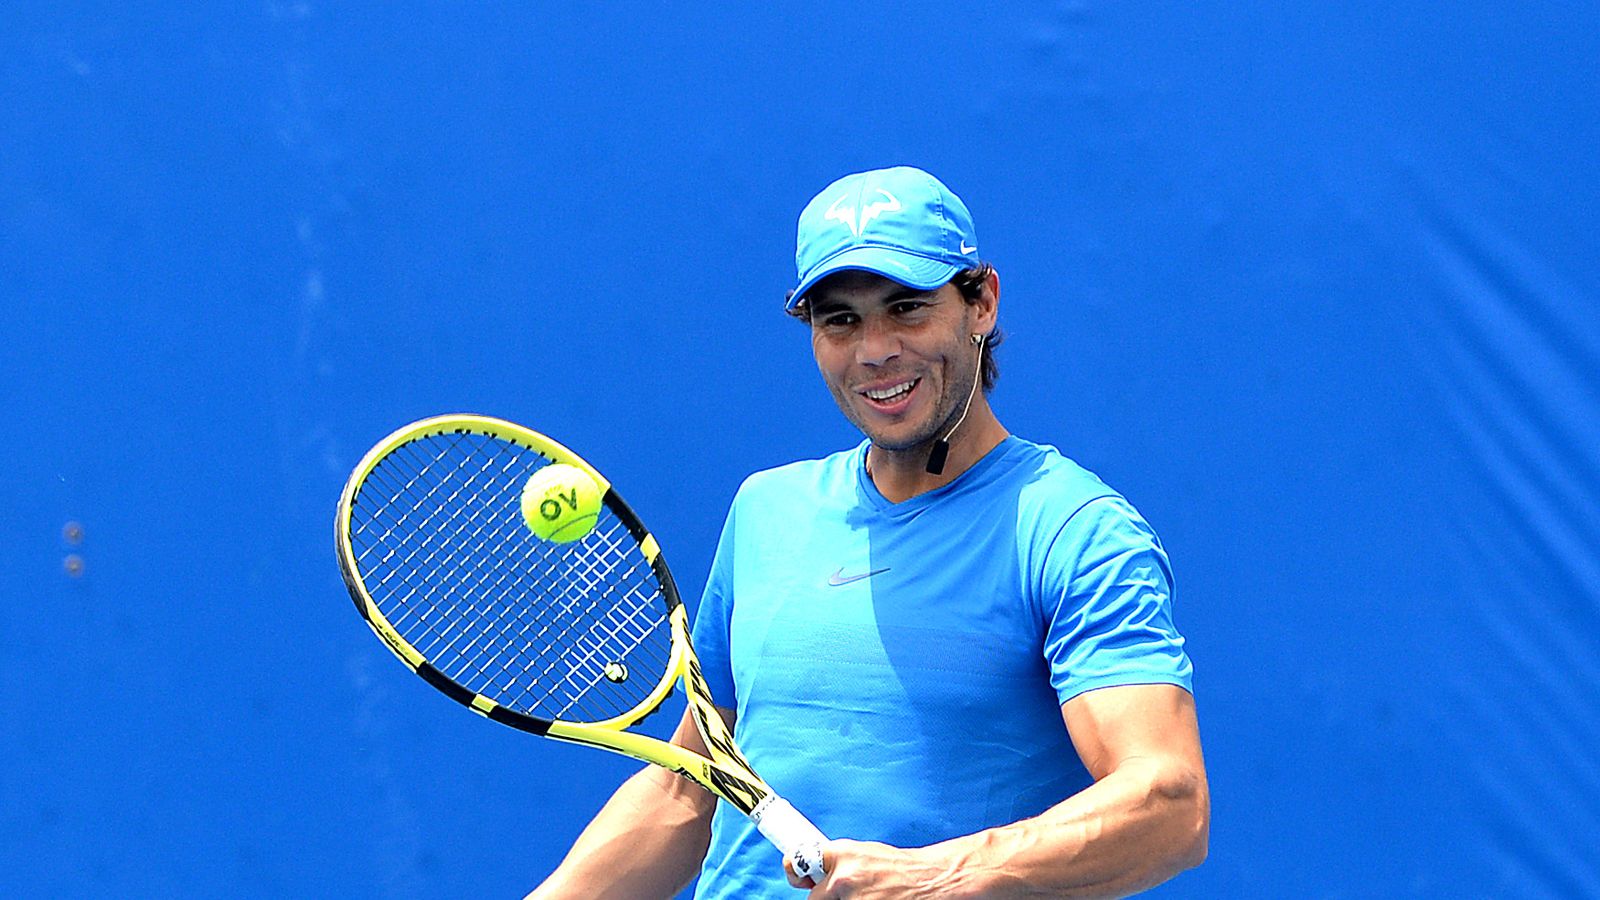 Rafael Nadal says he's healthy and pain free ahead of Australian Open | Tennis News | Sky Sports